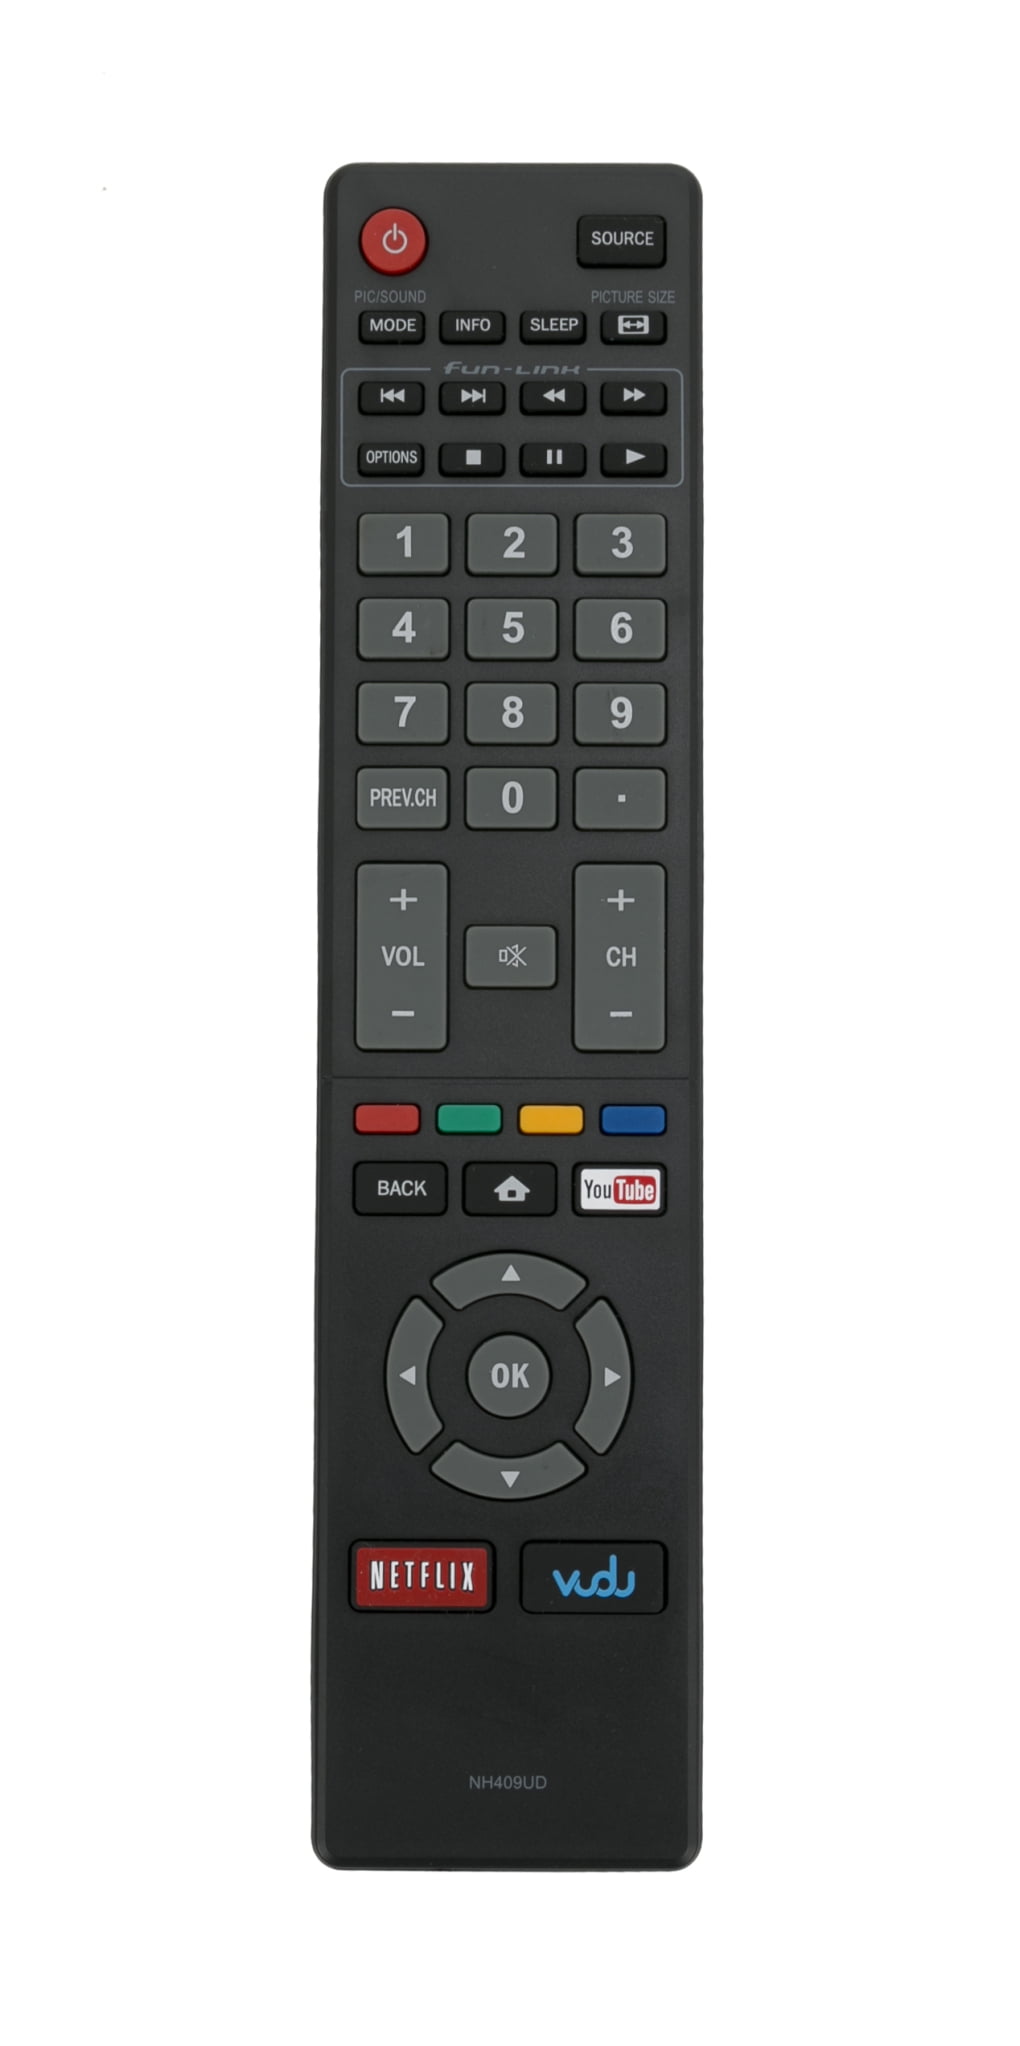 magnavox remote codes for polaroid tv